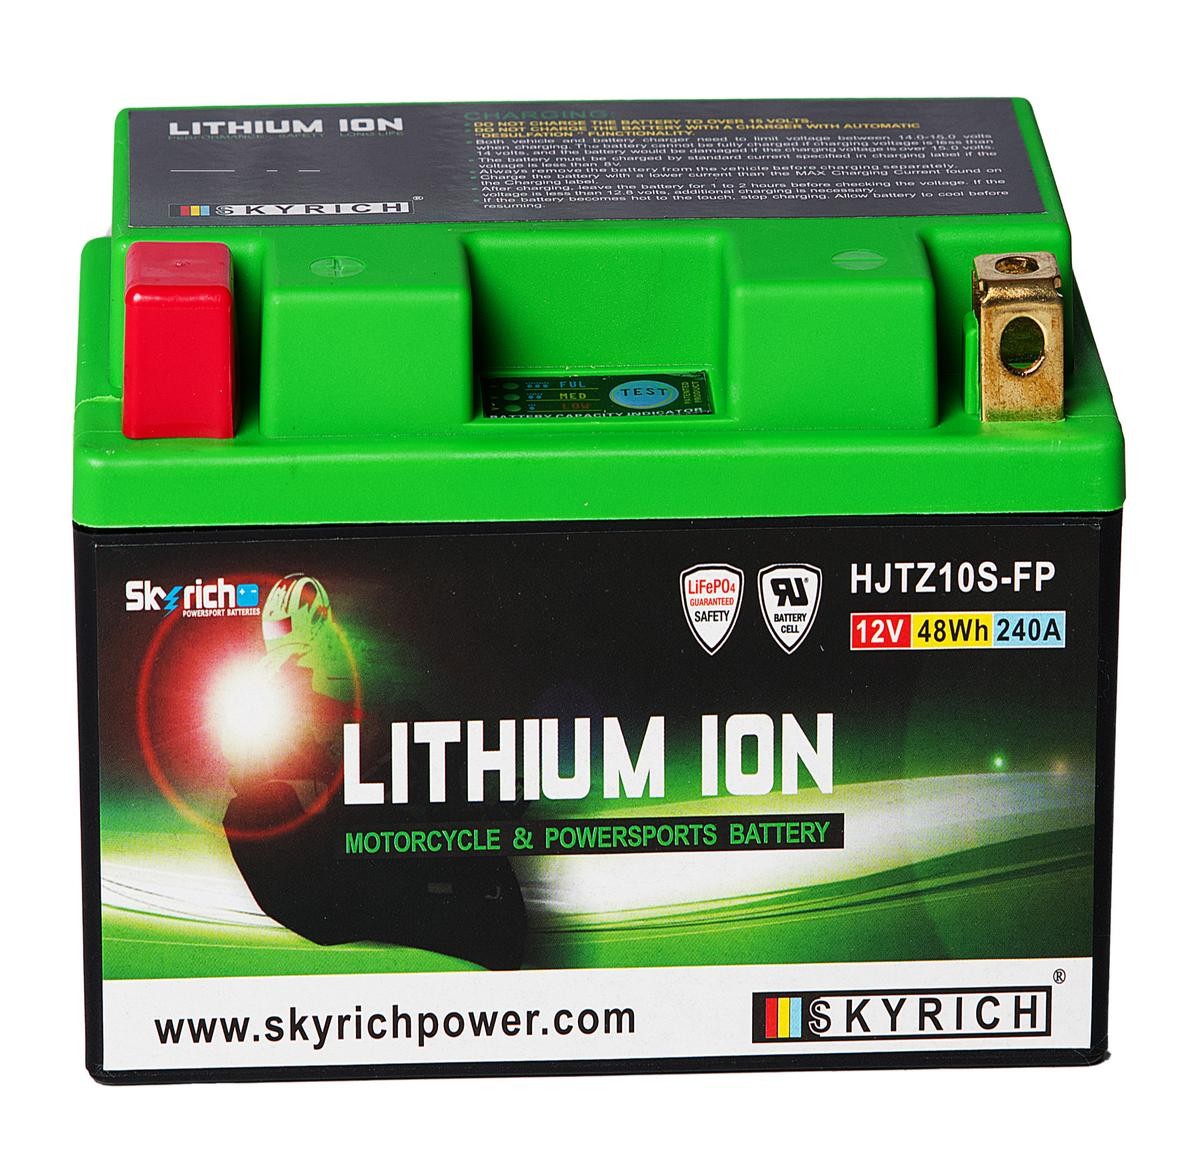 KTM ADVENTURE Batterie 12V 4Ah 240A N Li-Ionen-Batterie SKYRICH LITHIUM ION HJTZ10S-FP